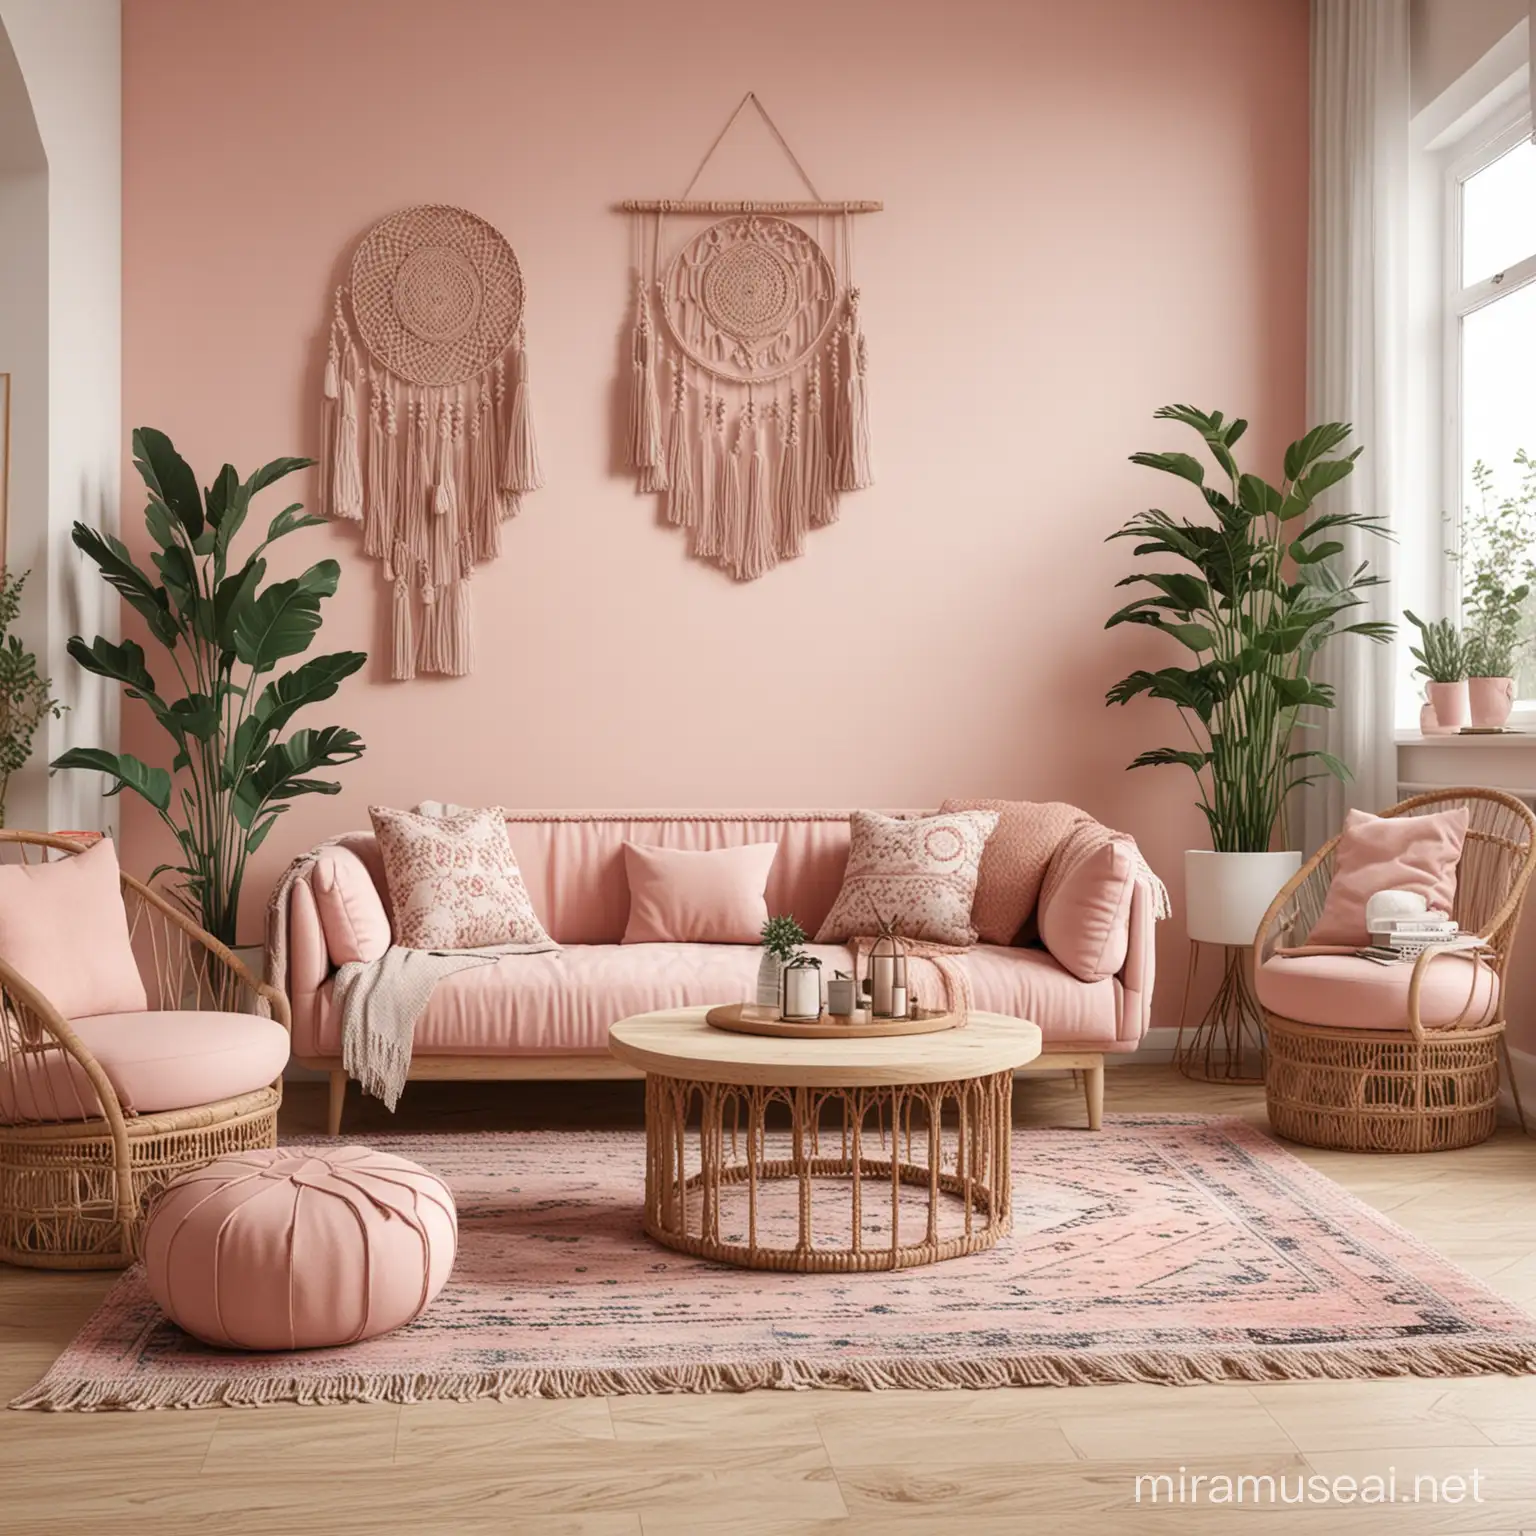 Boho living room mockup a little bit pinkish room decor